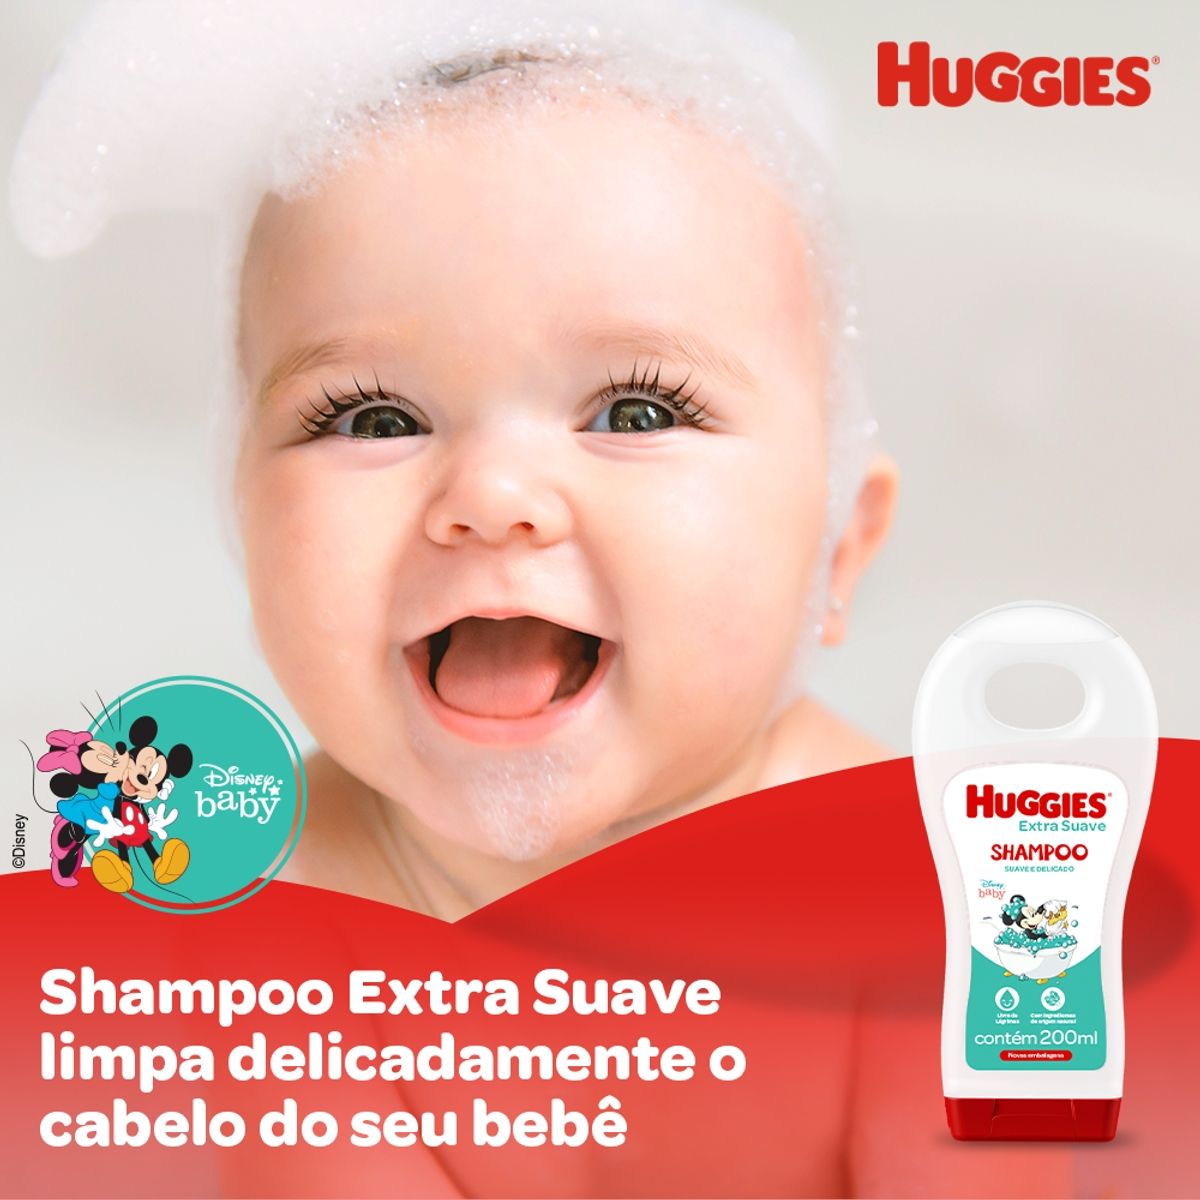 Shampoo Huggies Extra Suave - 200 ml image number 2